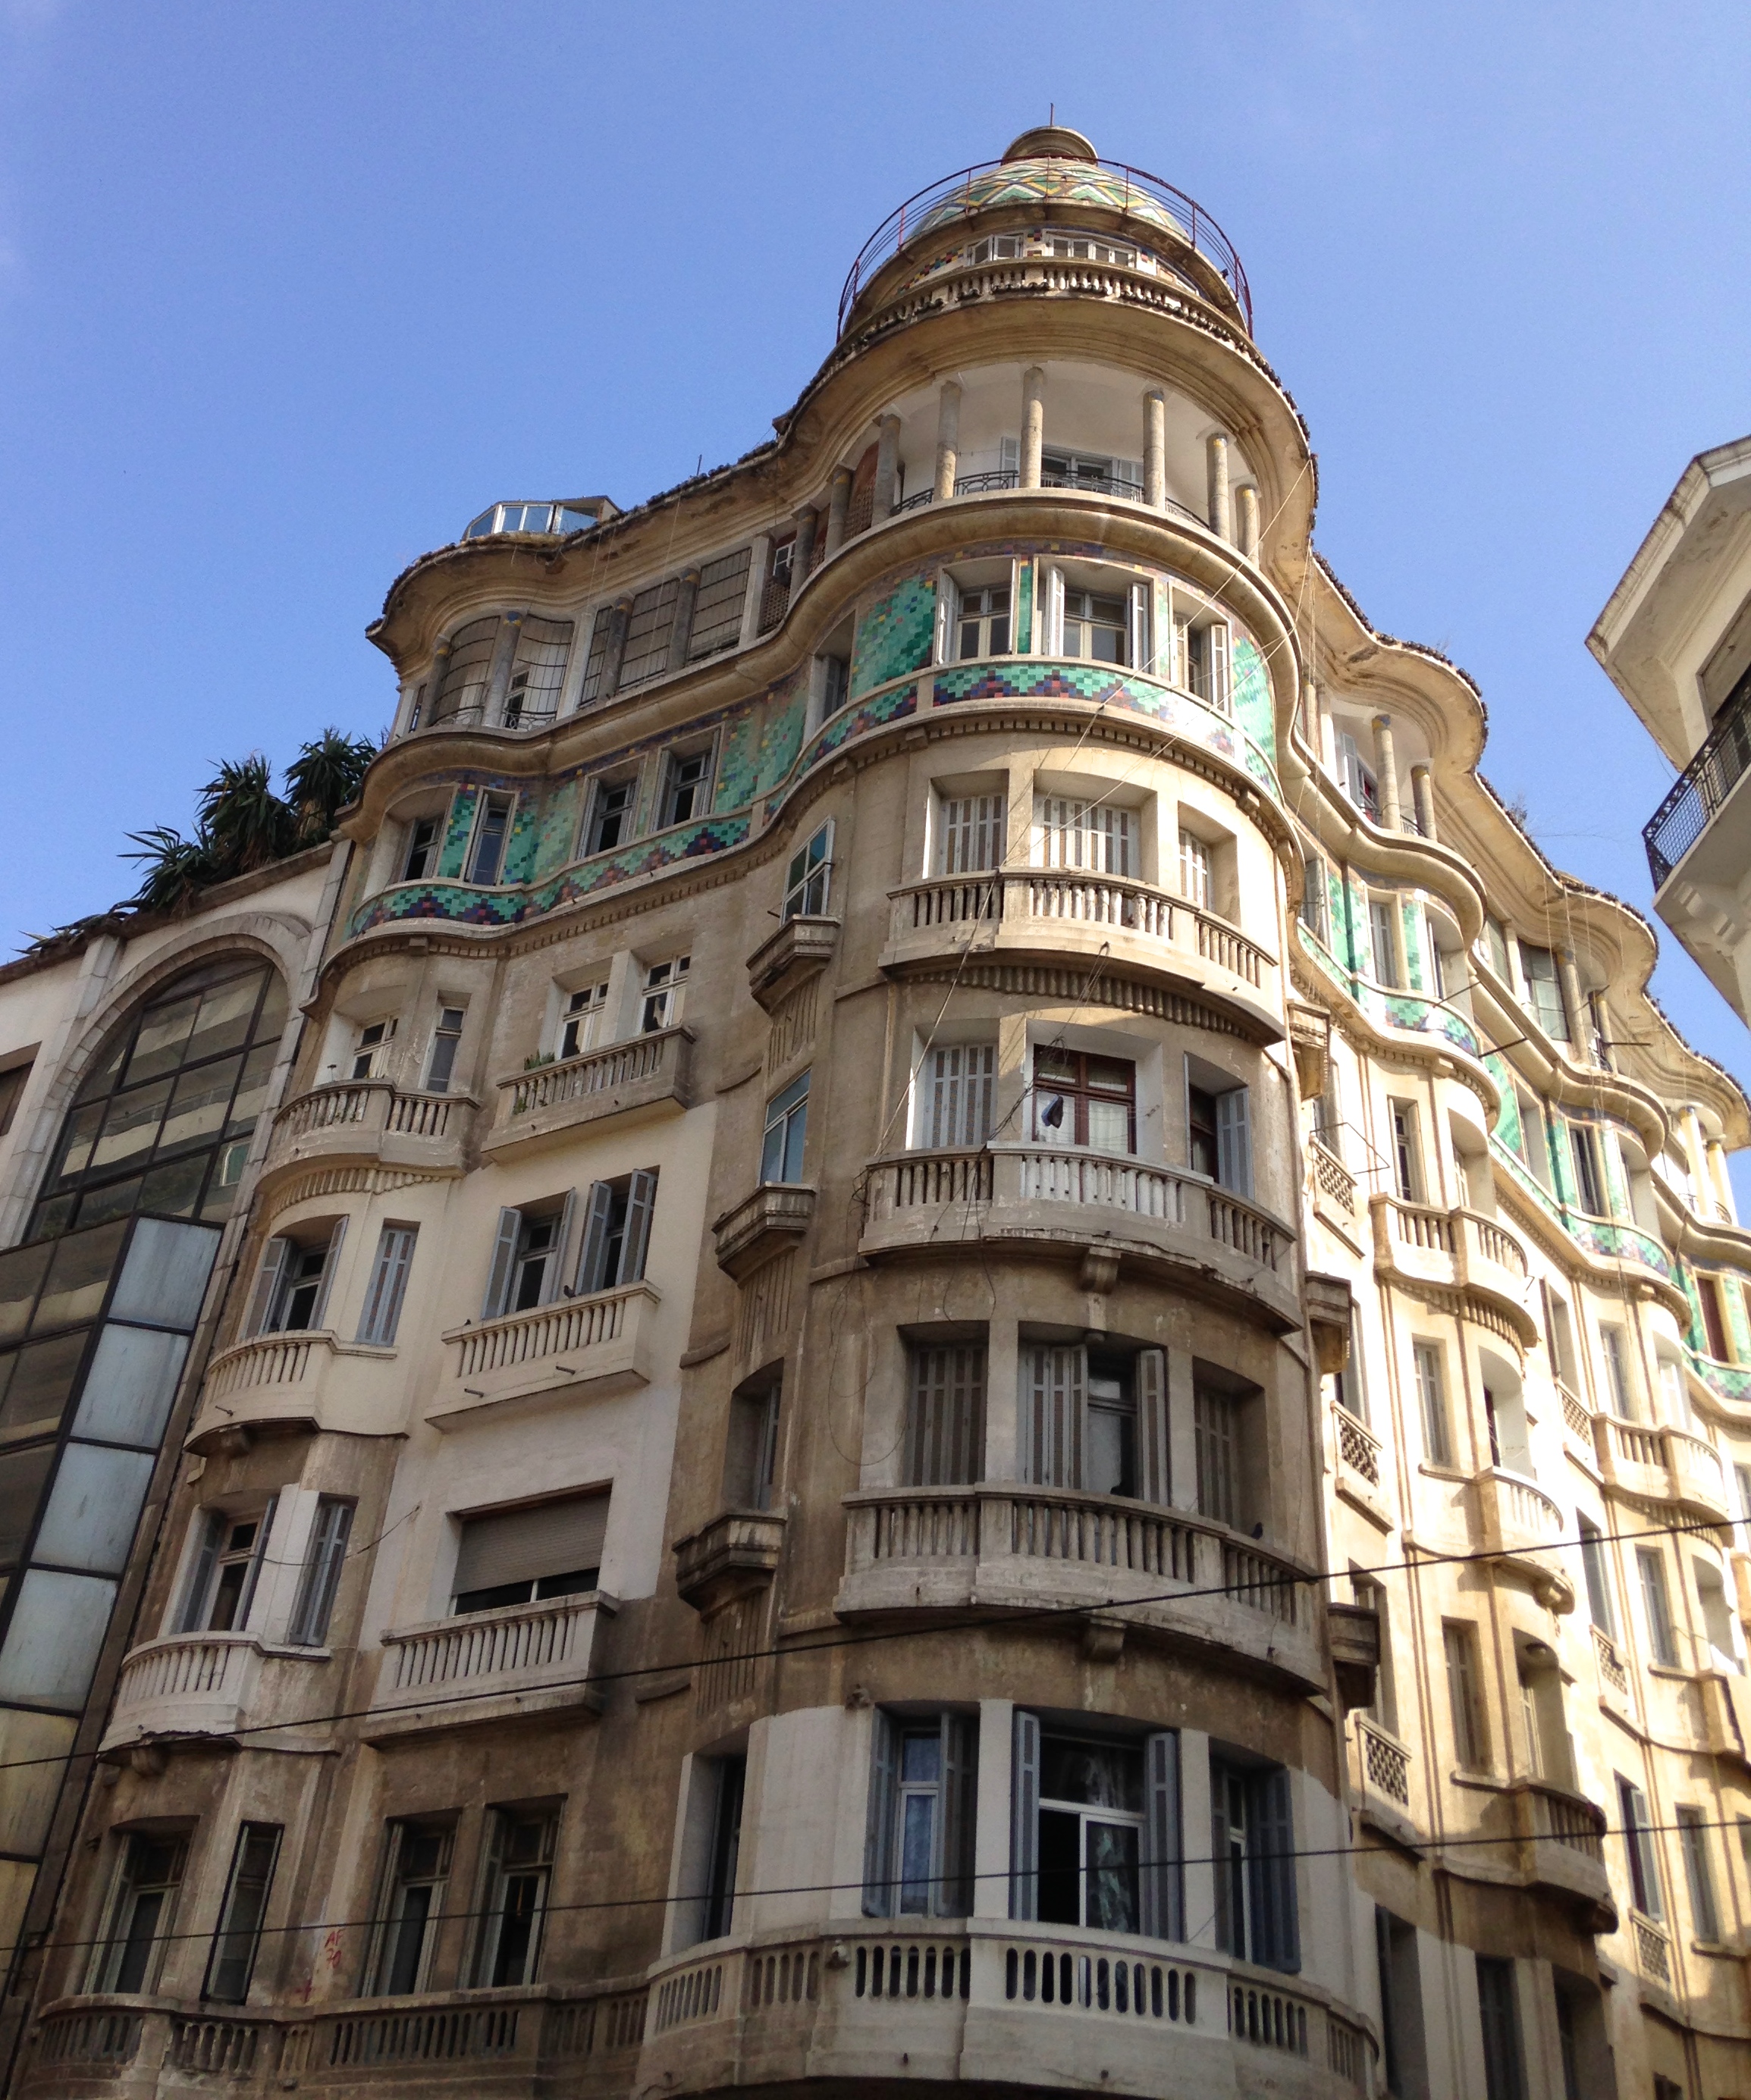 Casablanca architecture reminds me of Cairo